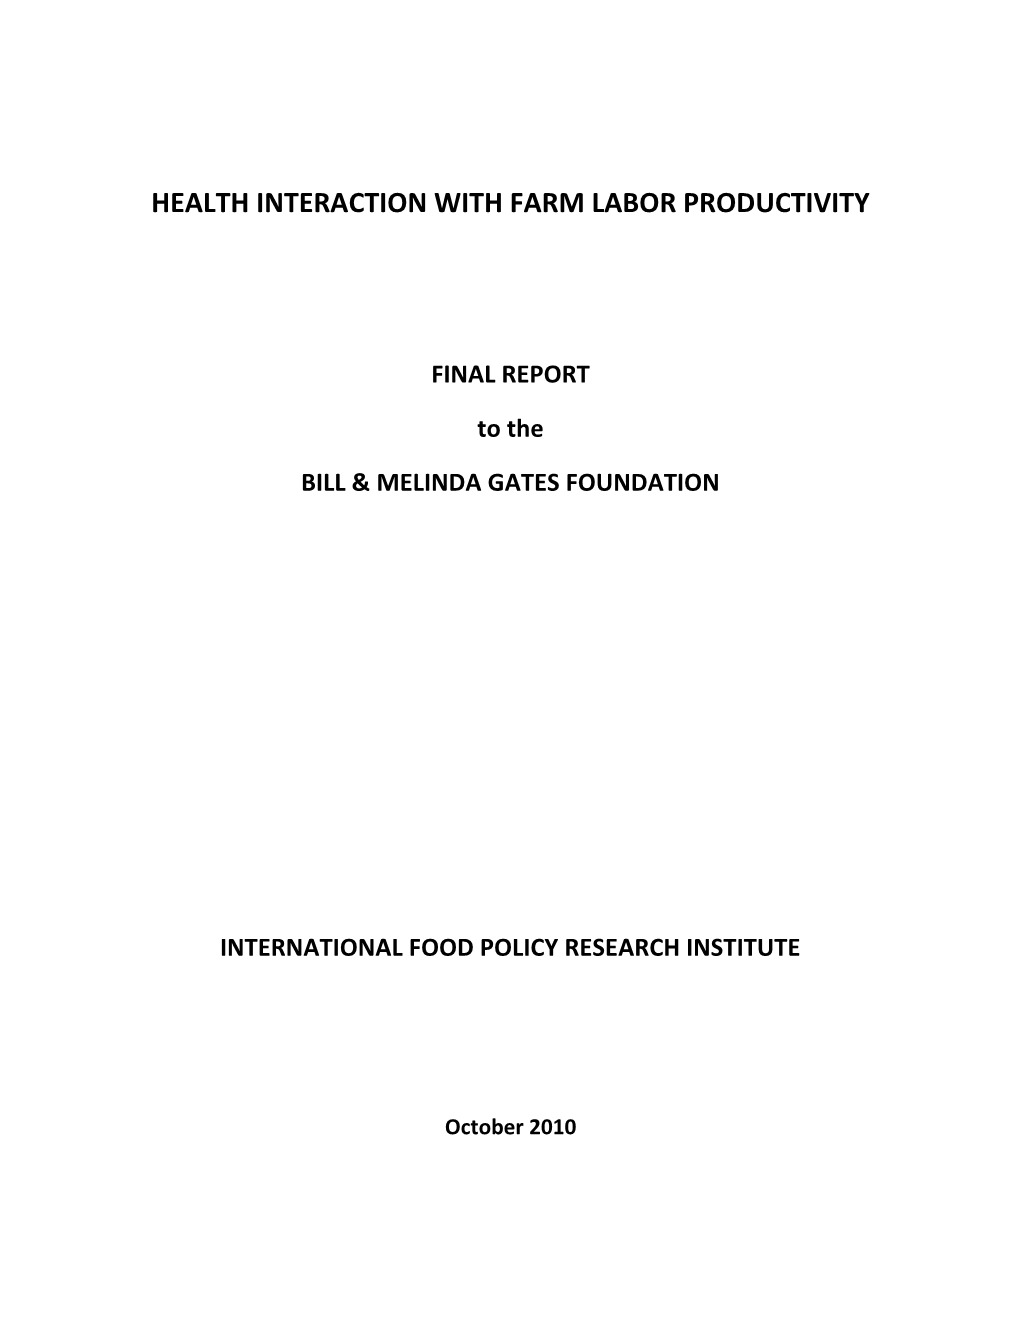 Health Interaction with Farm Labor Productivity